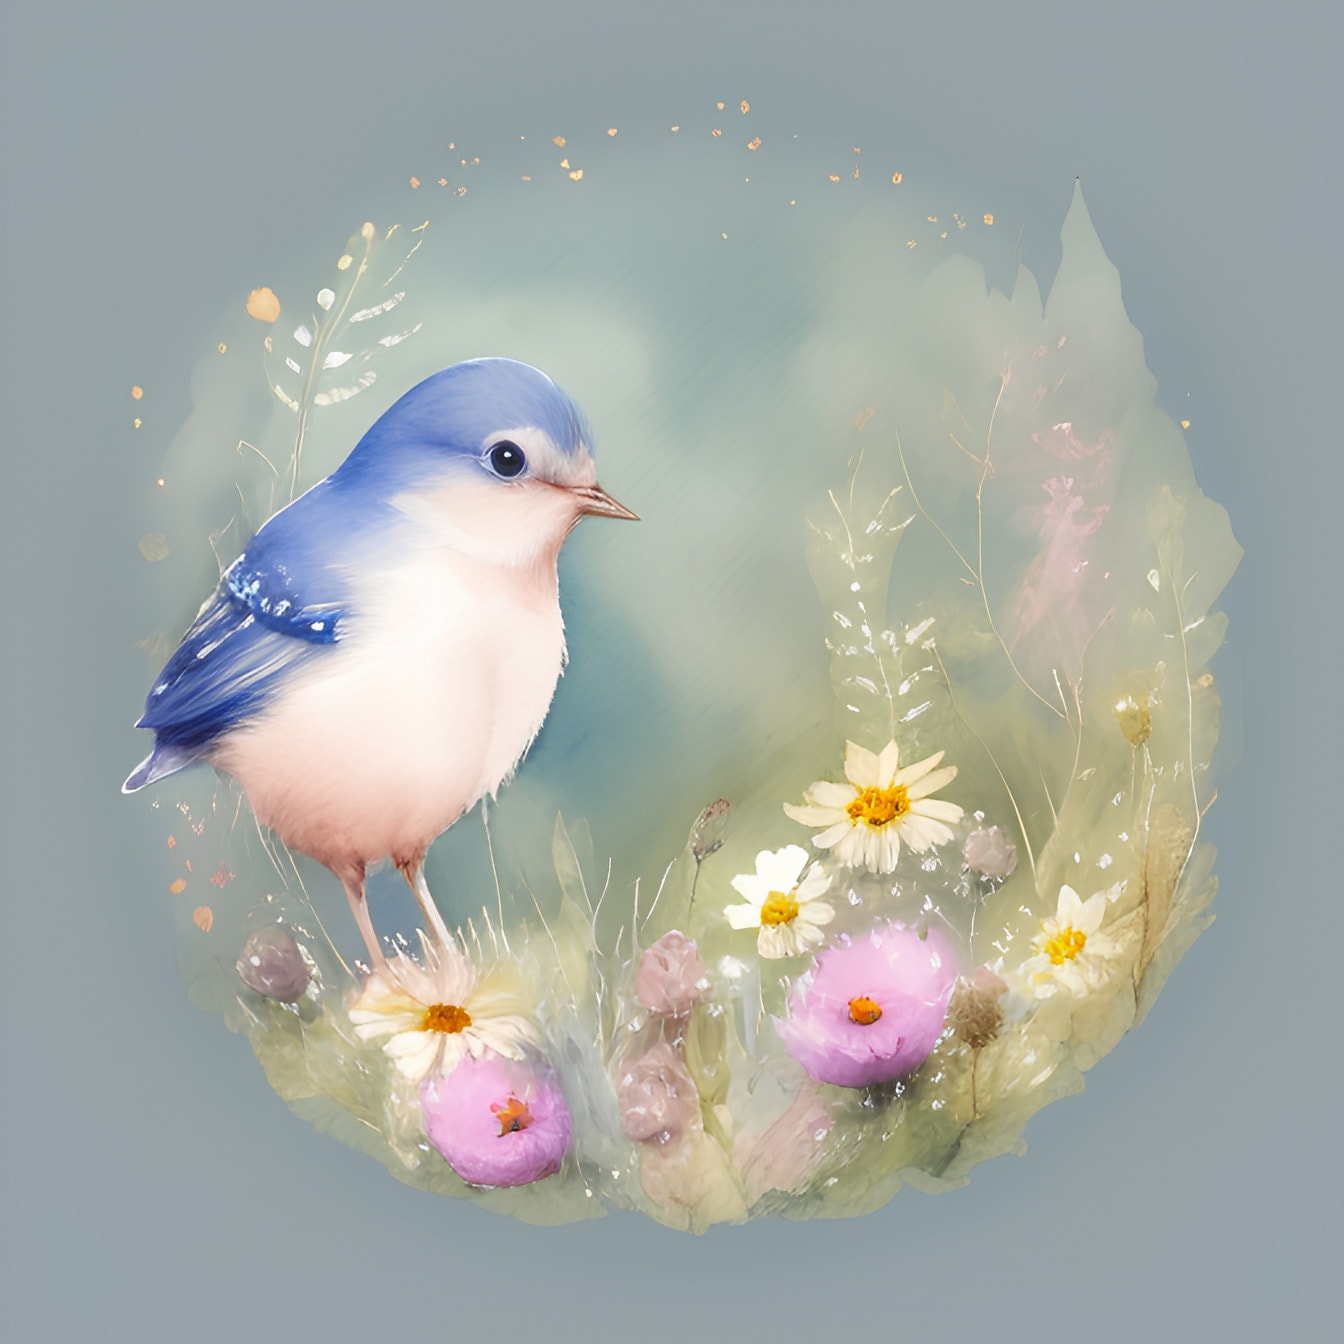 Little blue bird watercolor portrait